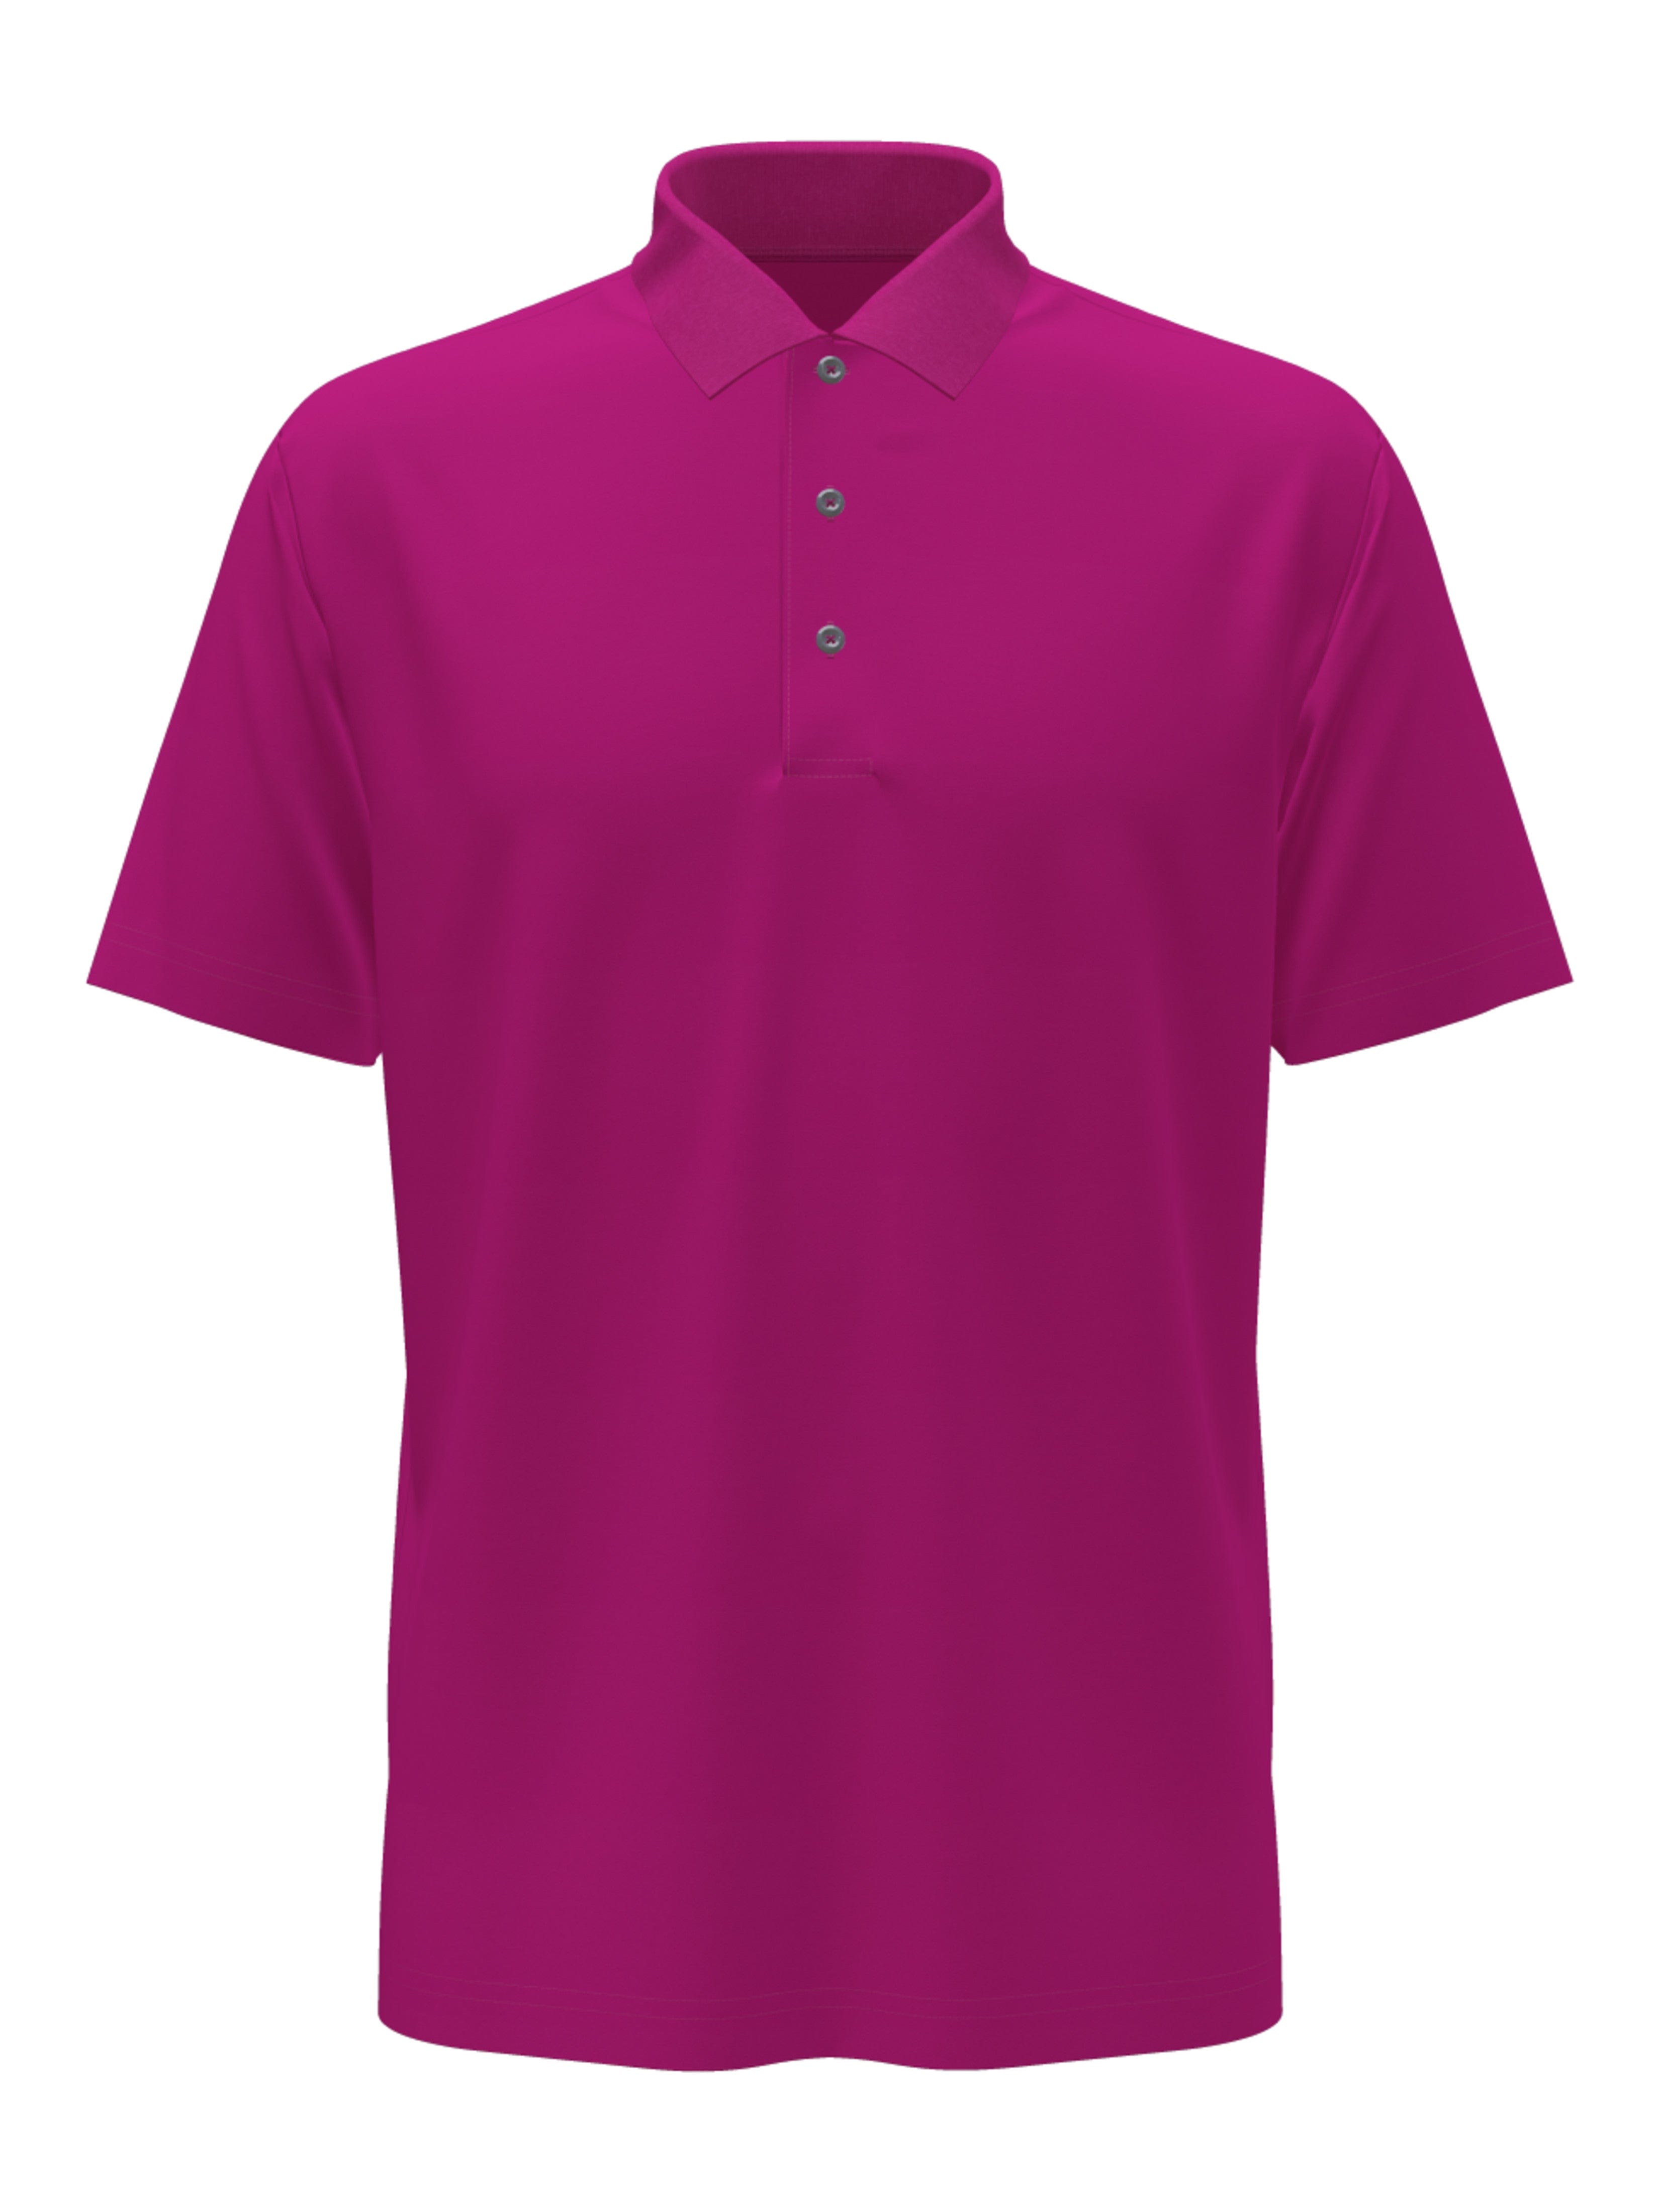 PGA TOUR Apparel Boys AirFlux™ Solid Mesh Golf Polo Shirt, Size Large, Rose Violet Pink, 100% Polyester | Golf Apparel Shop